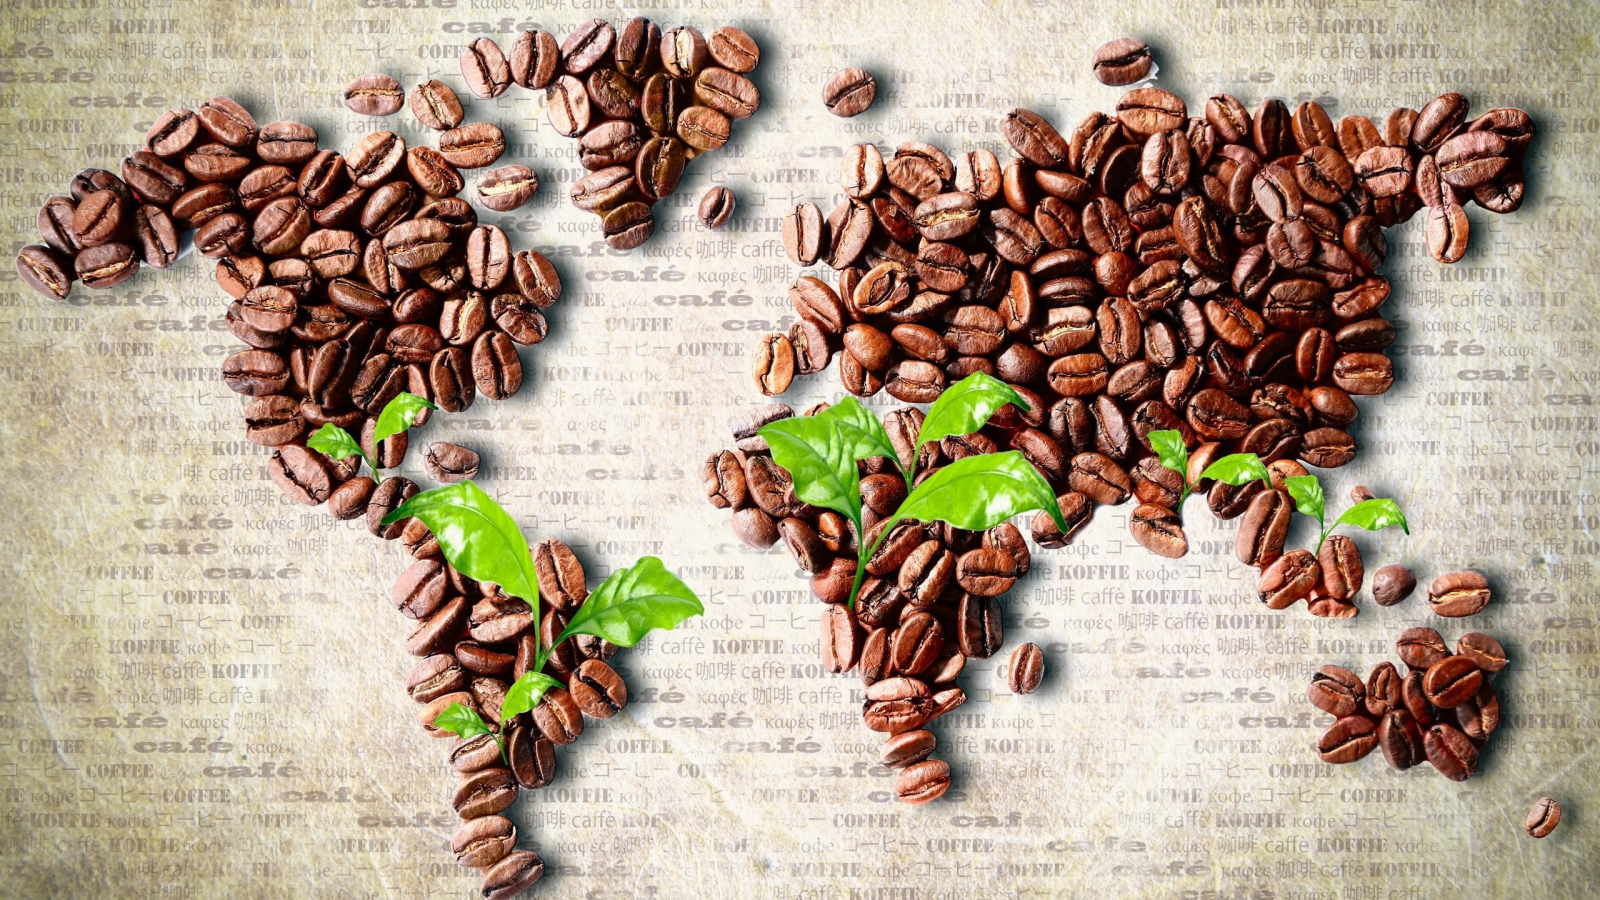 coffee beans, Листья, кофе в зернах, leaves, карта мира, continents, континенты, world map